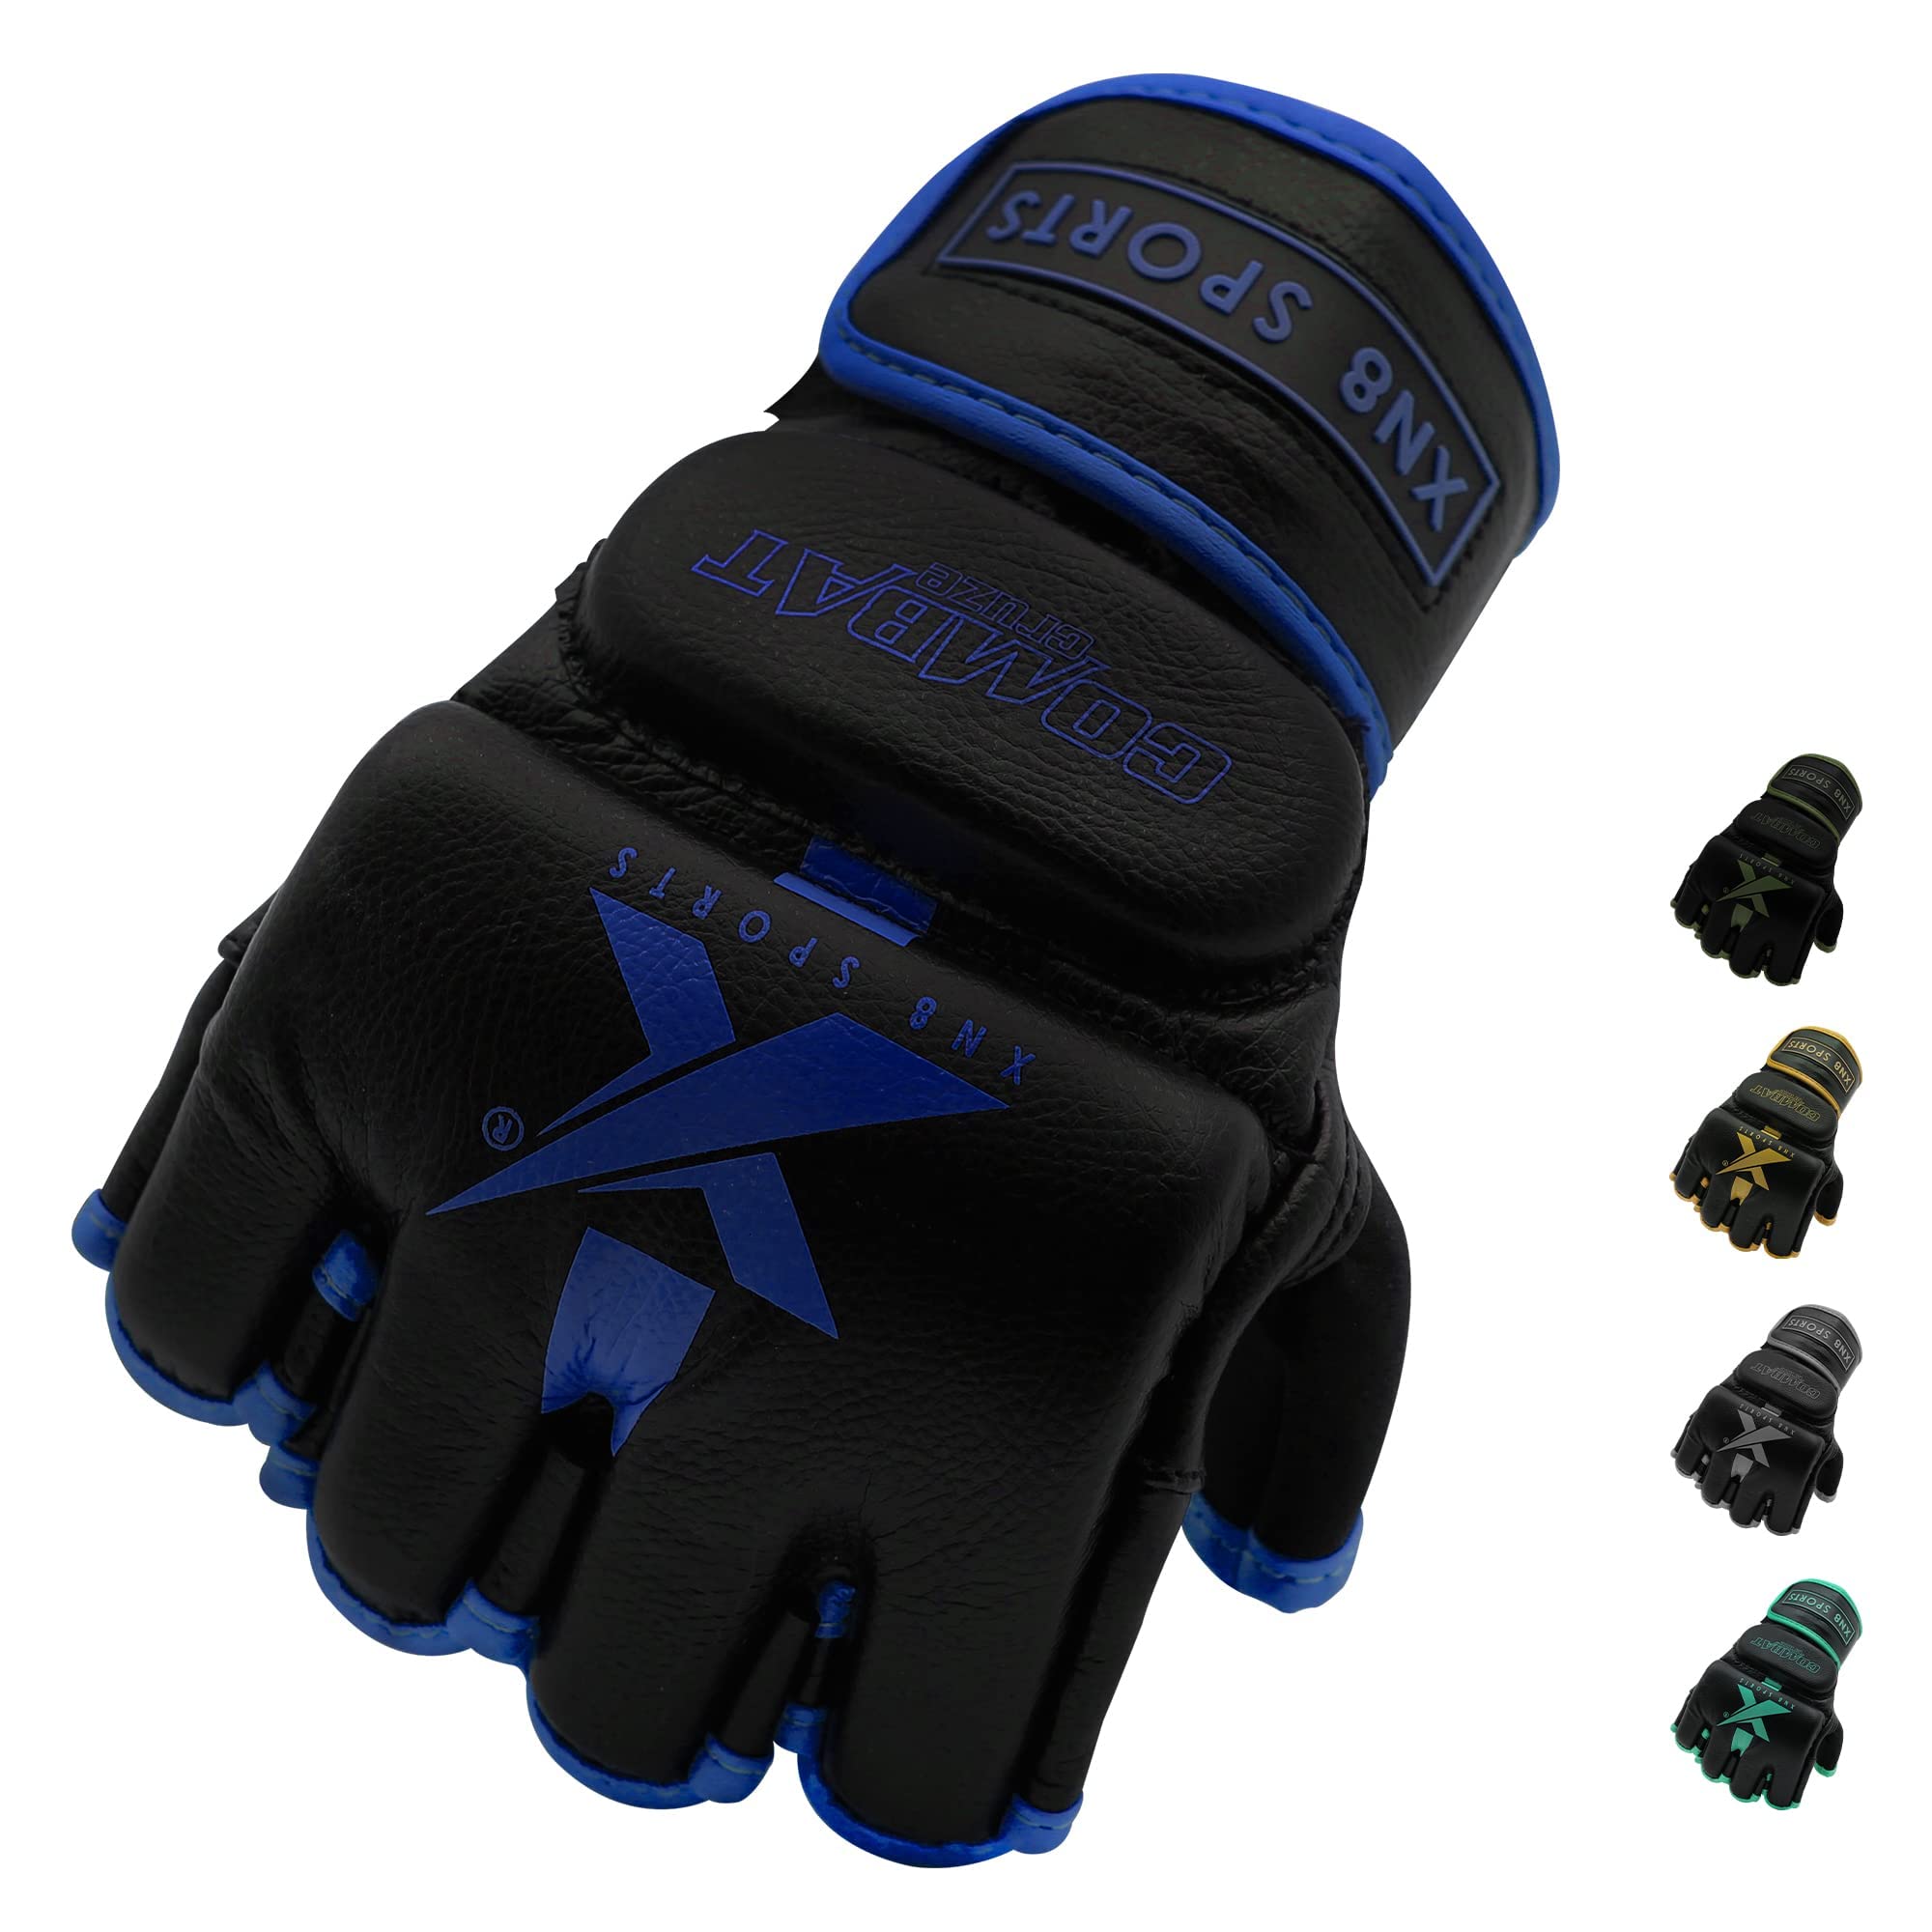 Xn8 Boxen MMA Handschuhe Boxhandschuhe für Kampfsport Boxsack Sparring Training Grappling Gloves